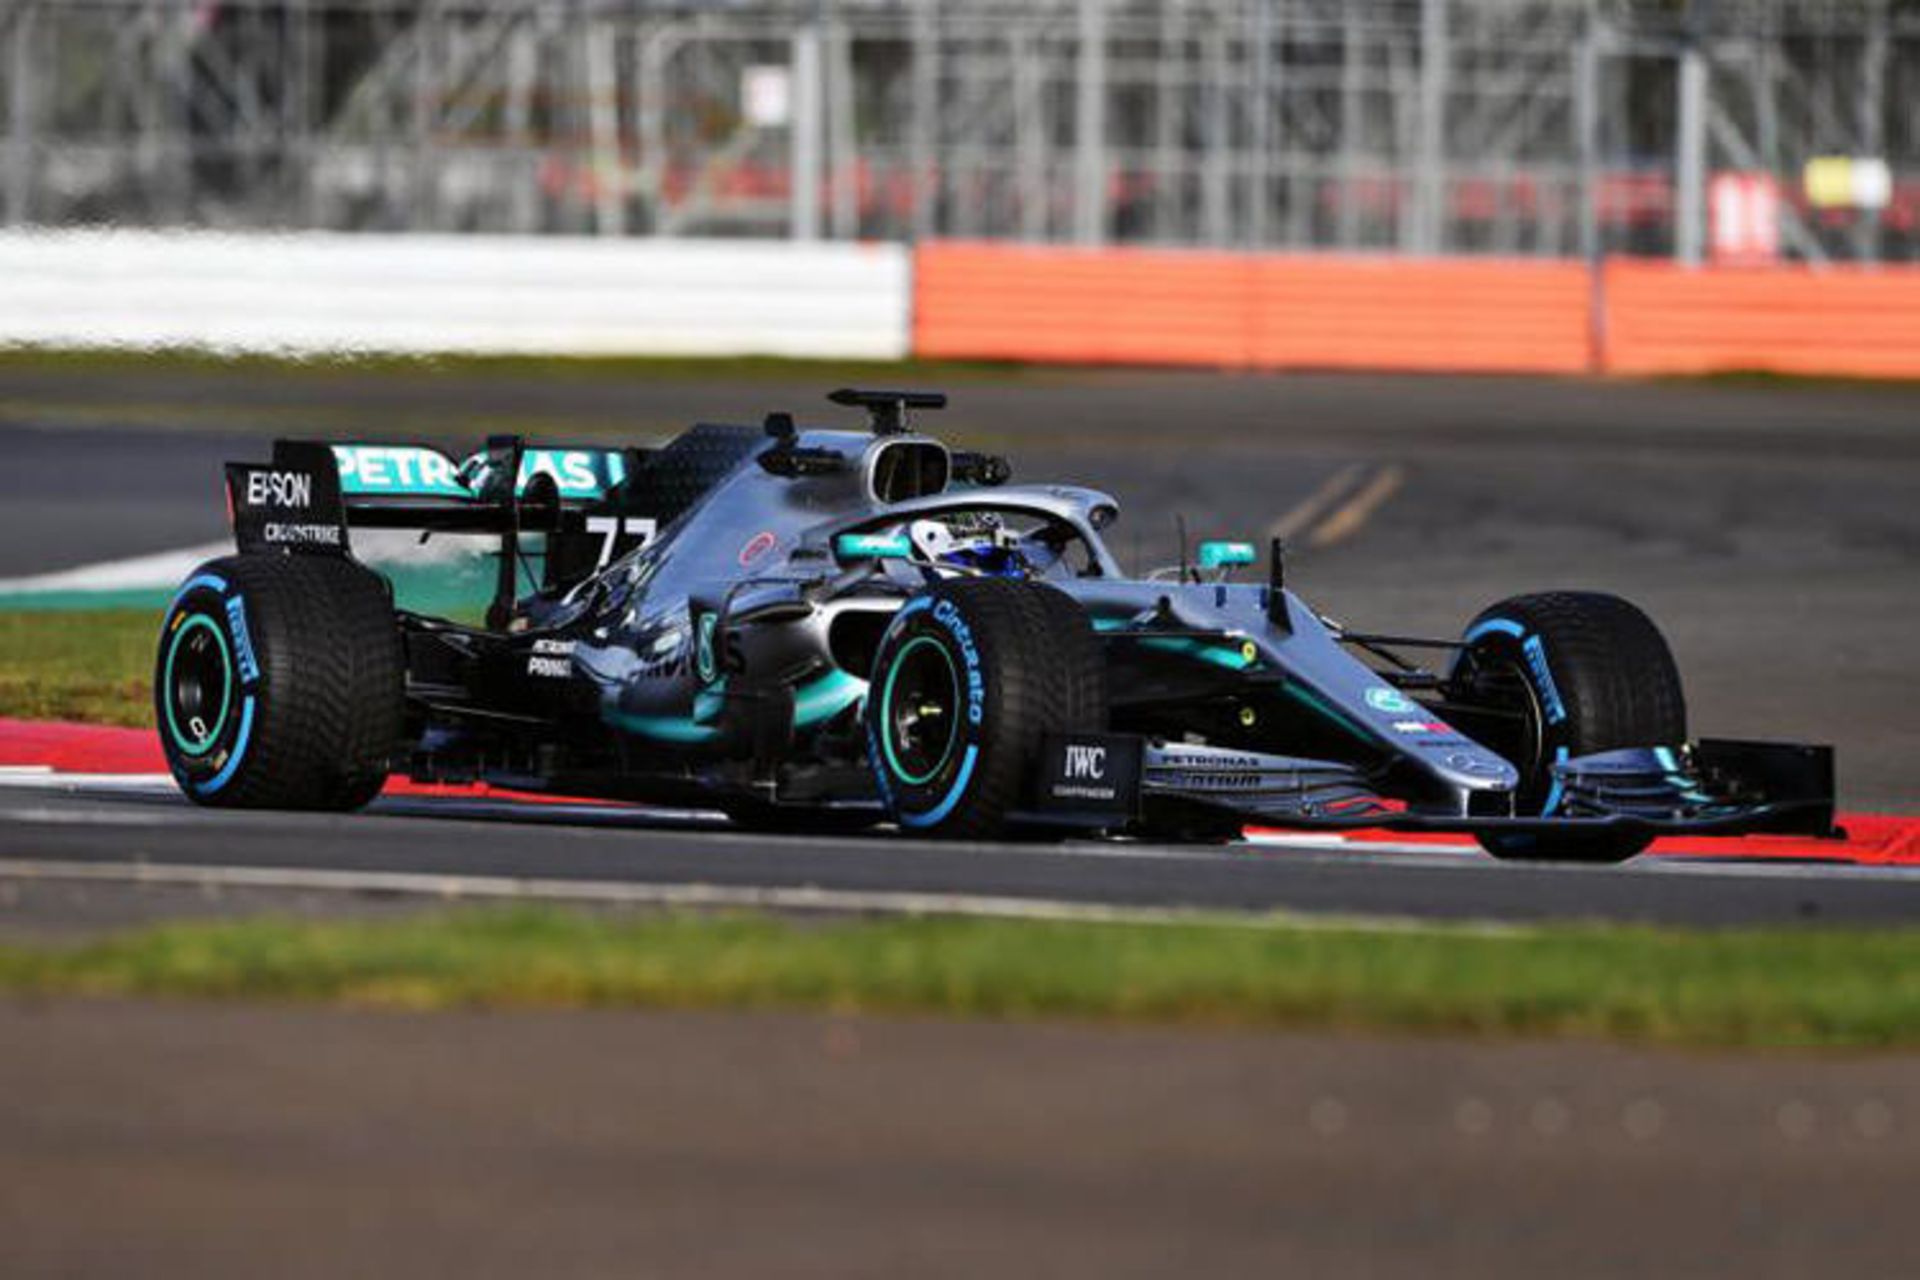 Mercedes 2019 Formula 1 car / فرمول یک مرسدس بنز